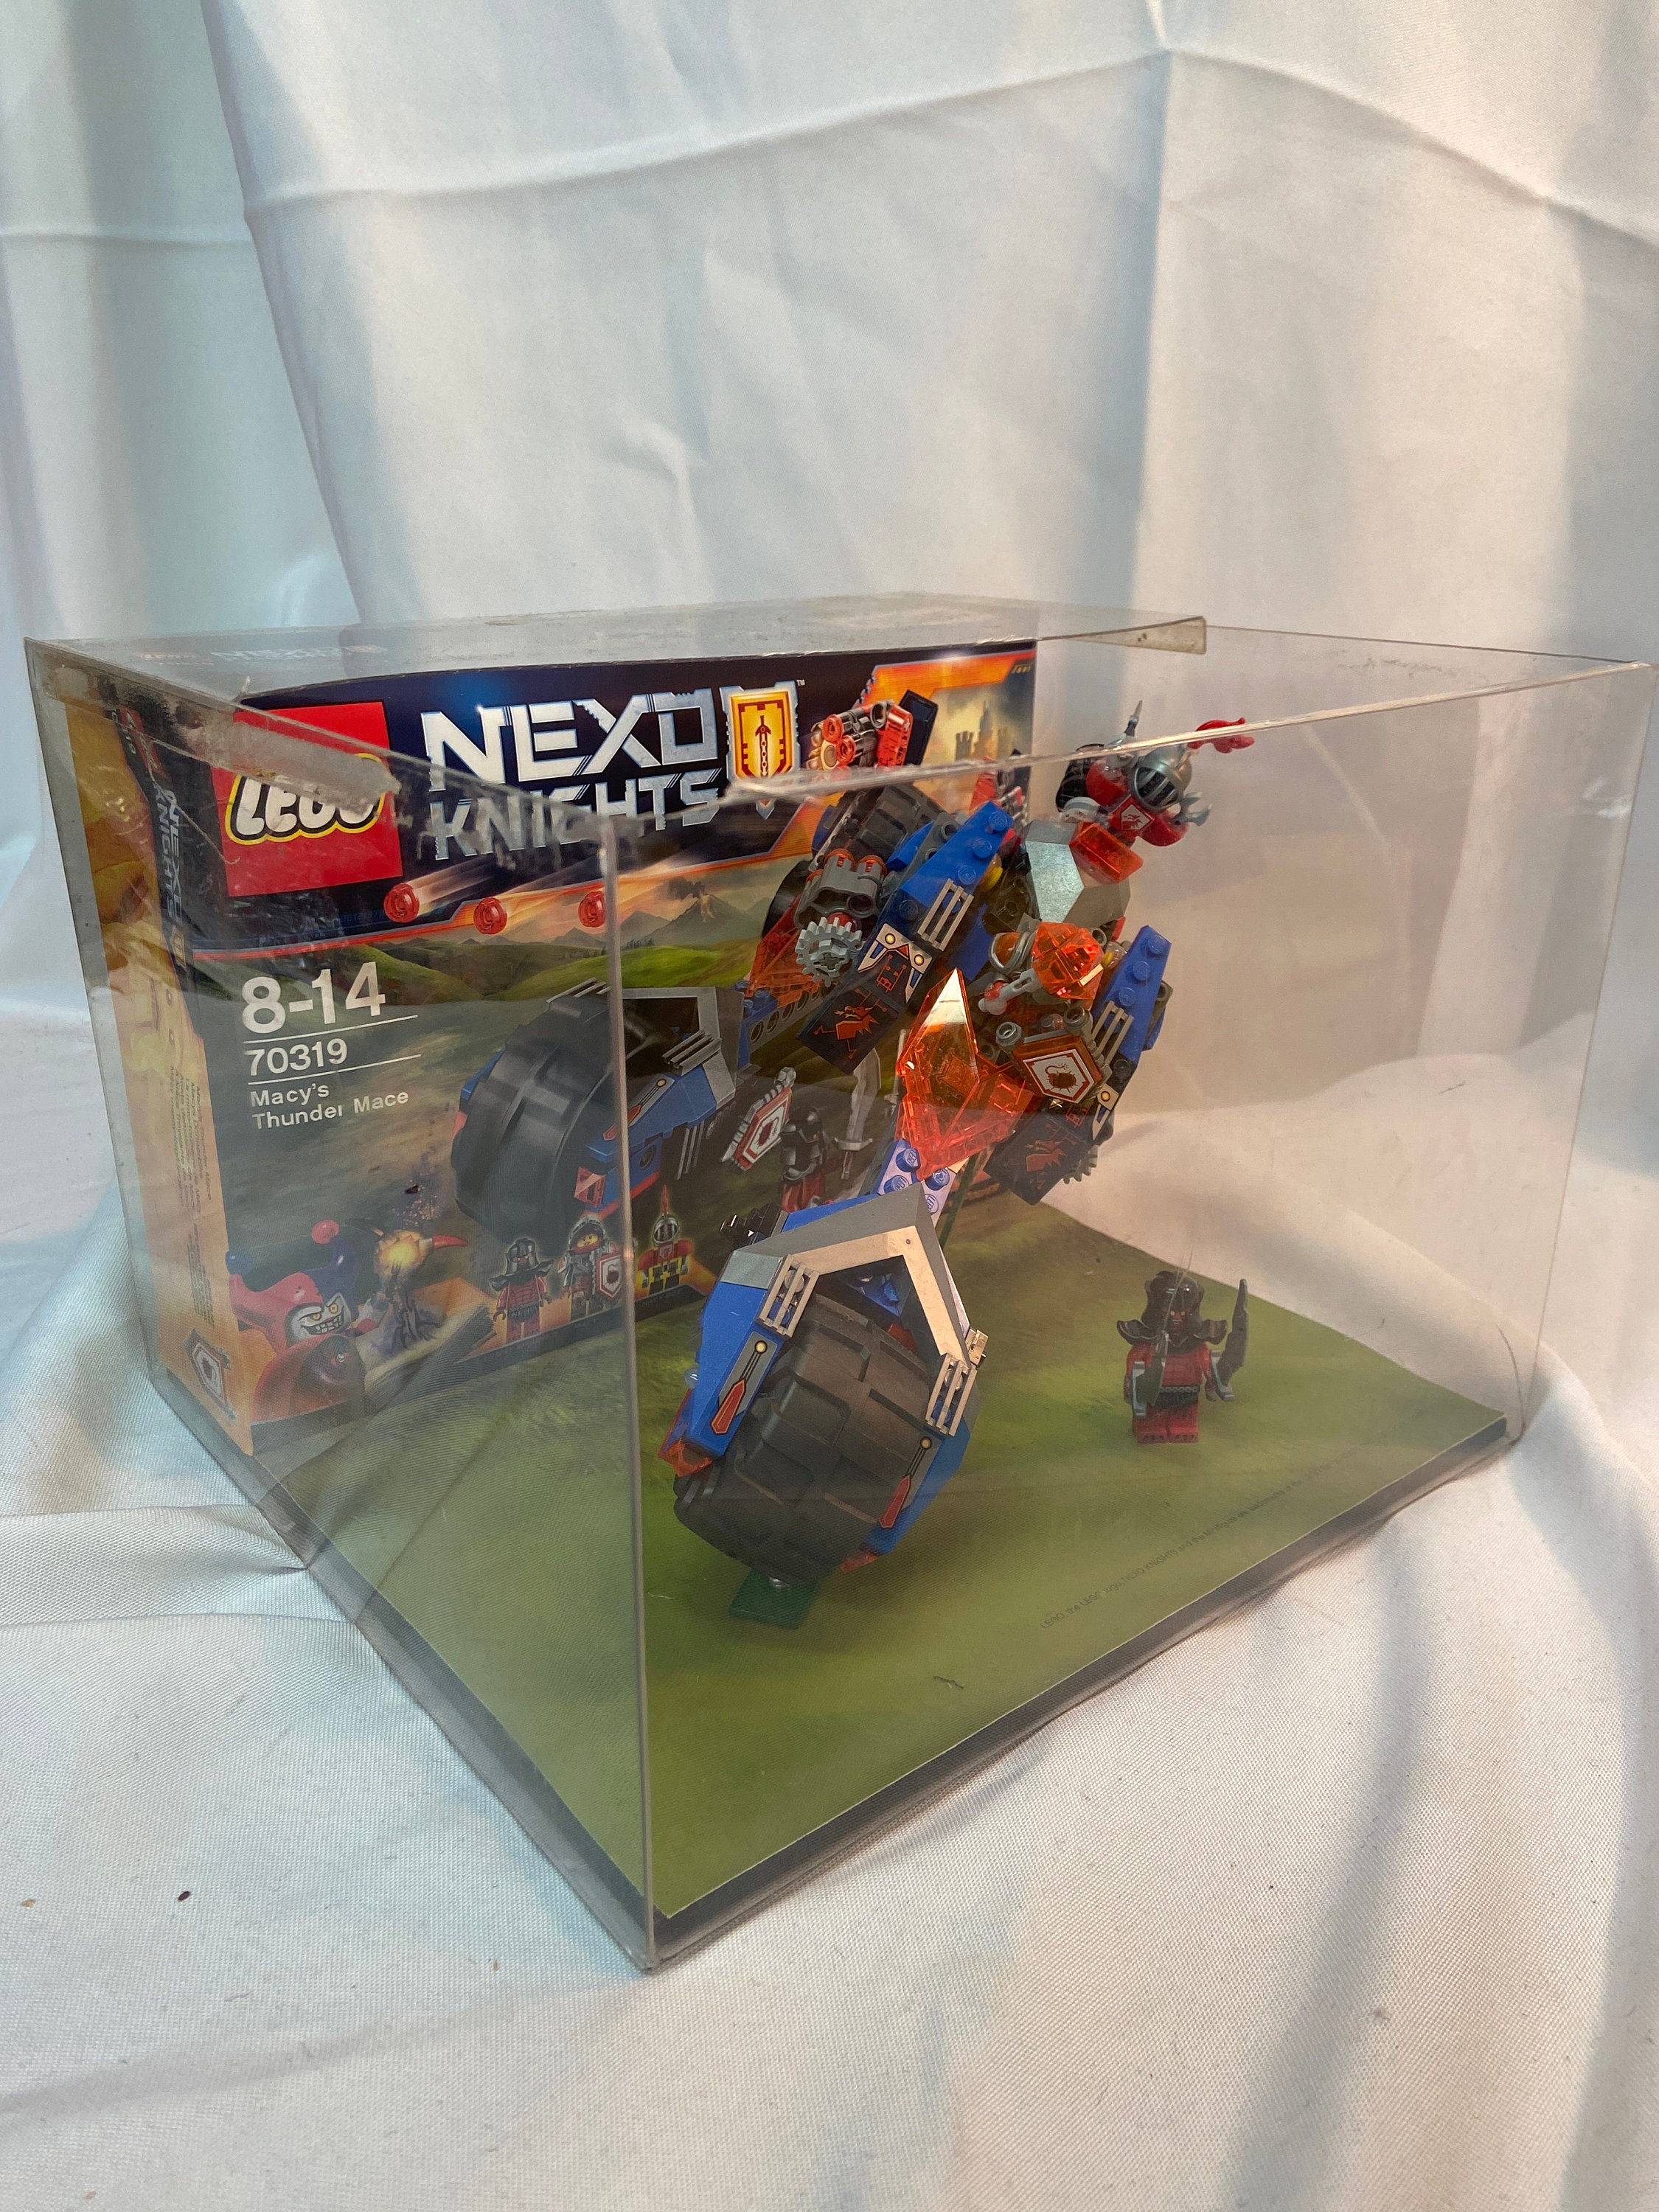 Alert Stat skildring Lego Nexo Knights 70319 Macys Thunder Mace Built Store - Etsy